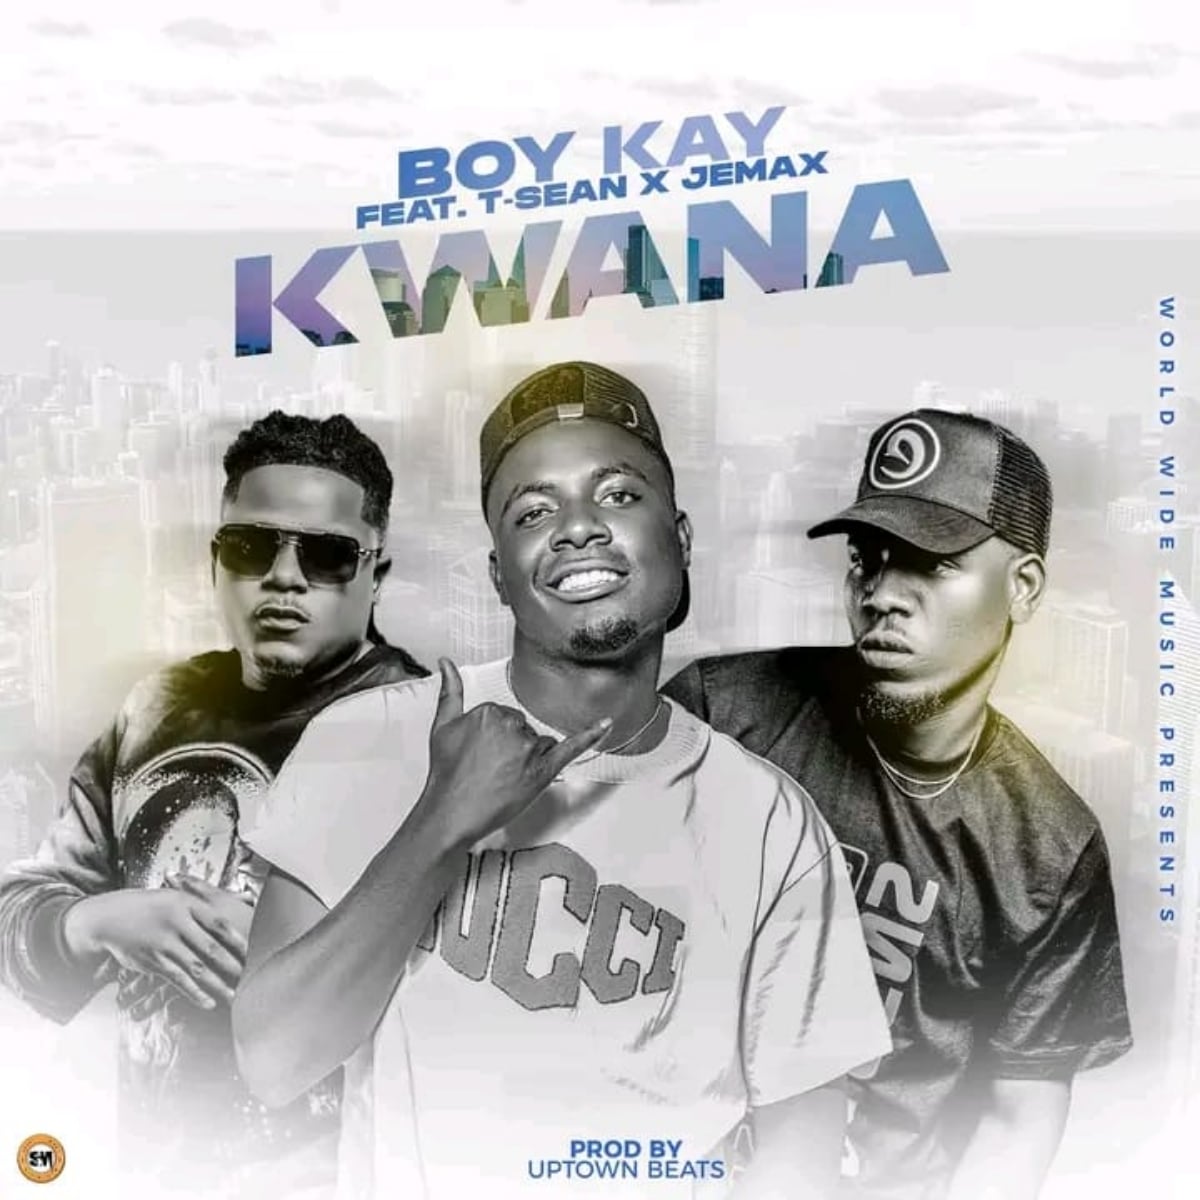 DOWNLOAD: Boy K Ft T Sean & Jemax – “Kwana” Mp3